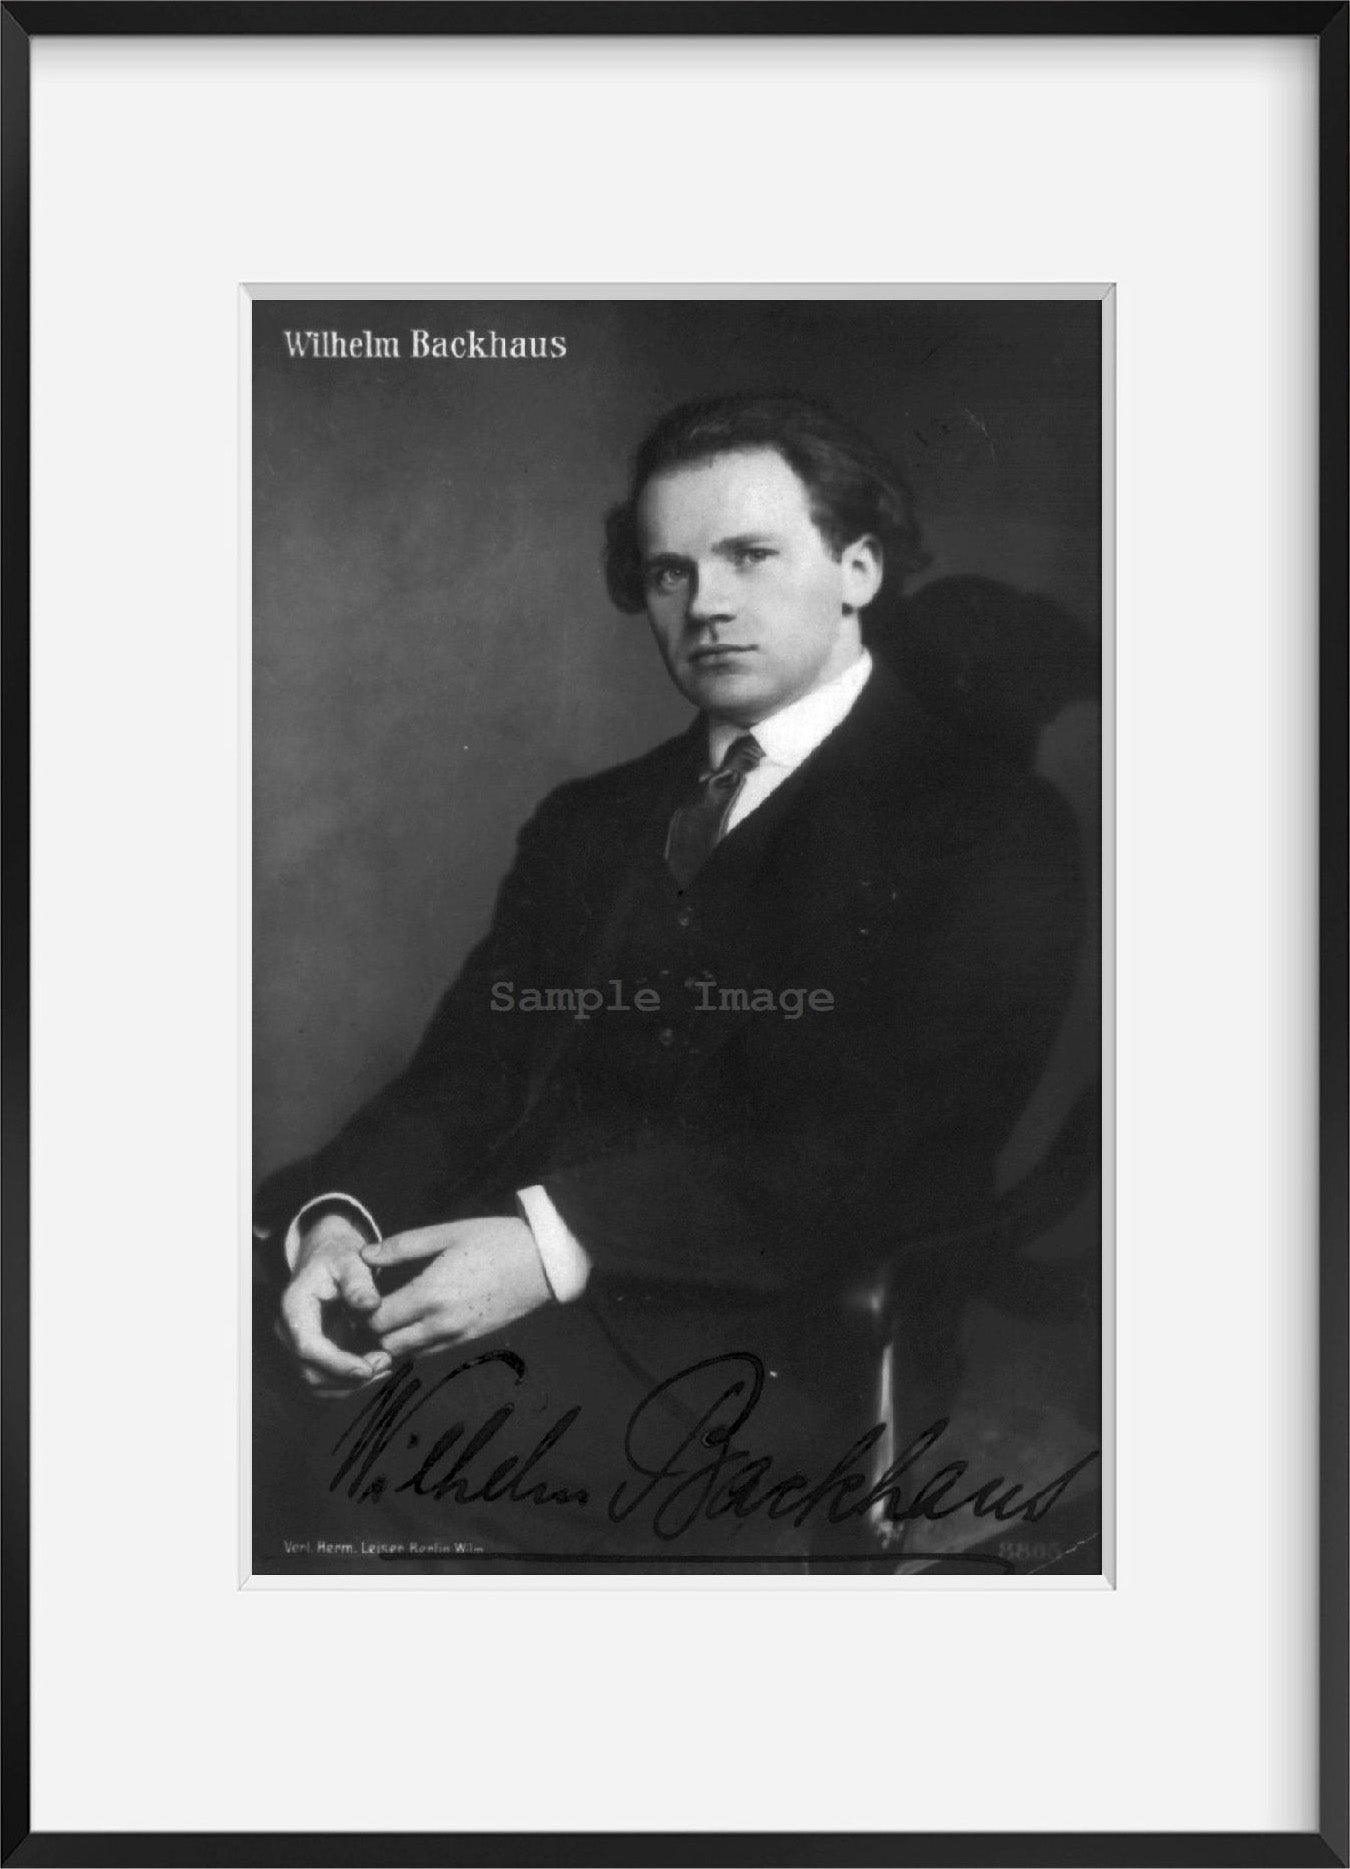 Photograph of Wilhelm Backhaus, half-length portrait, seated